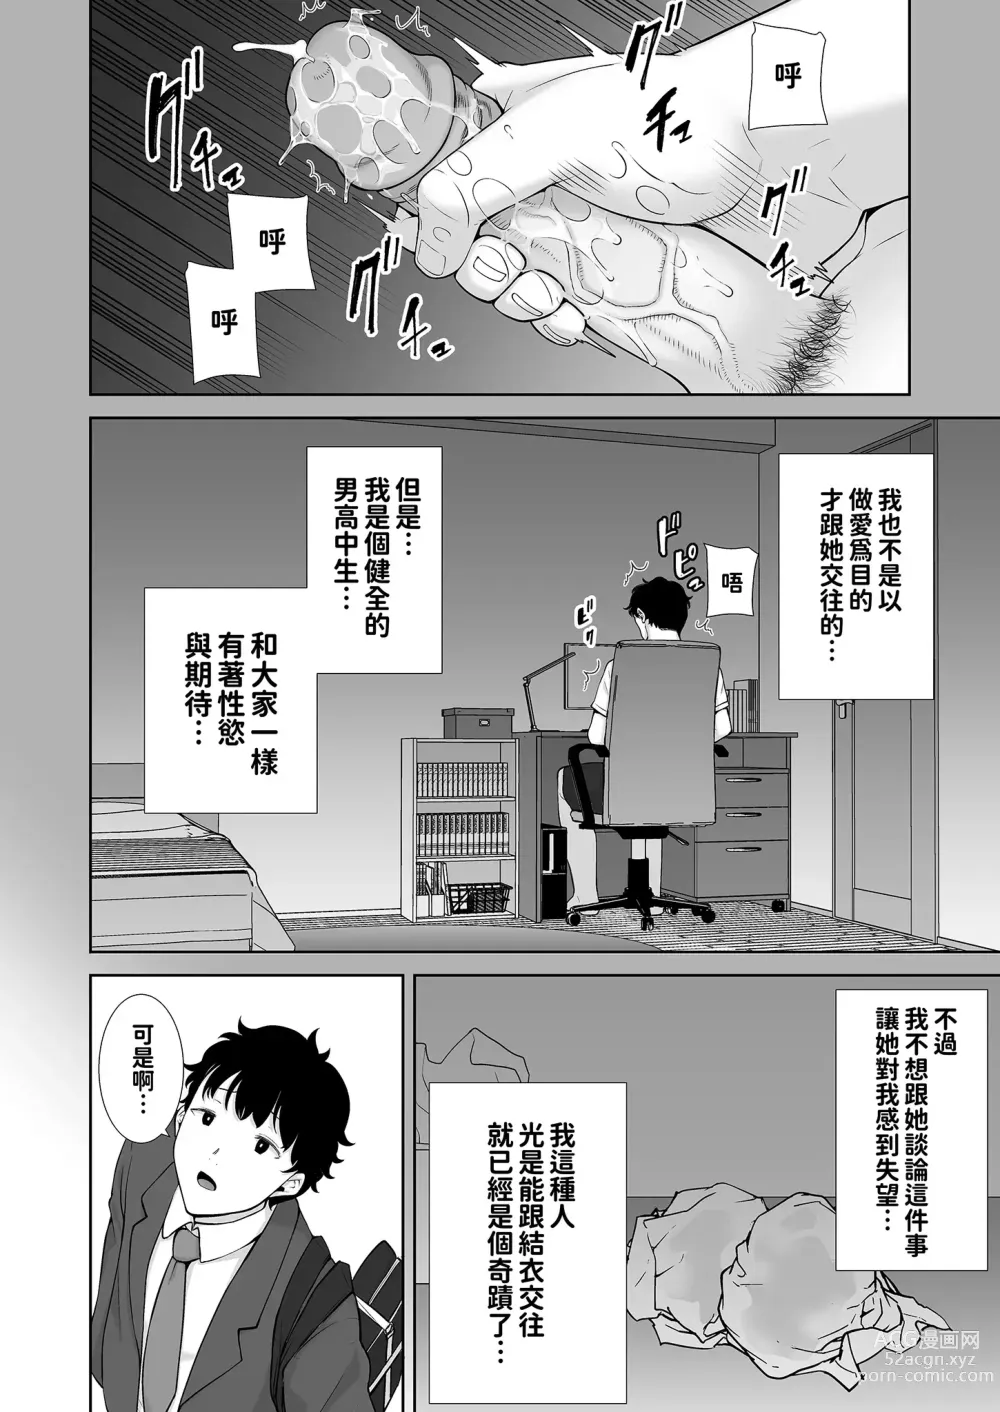 Page 9 of doujinshi sdgsd